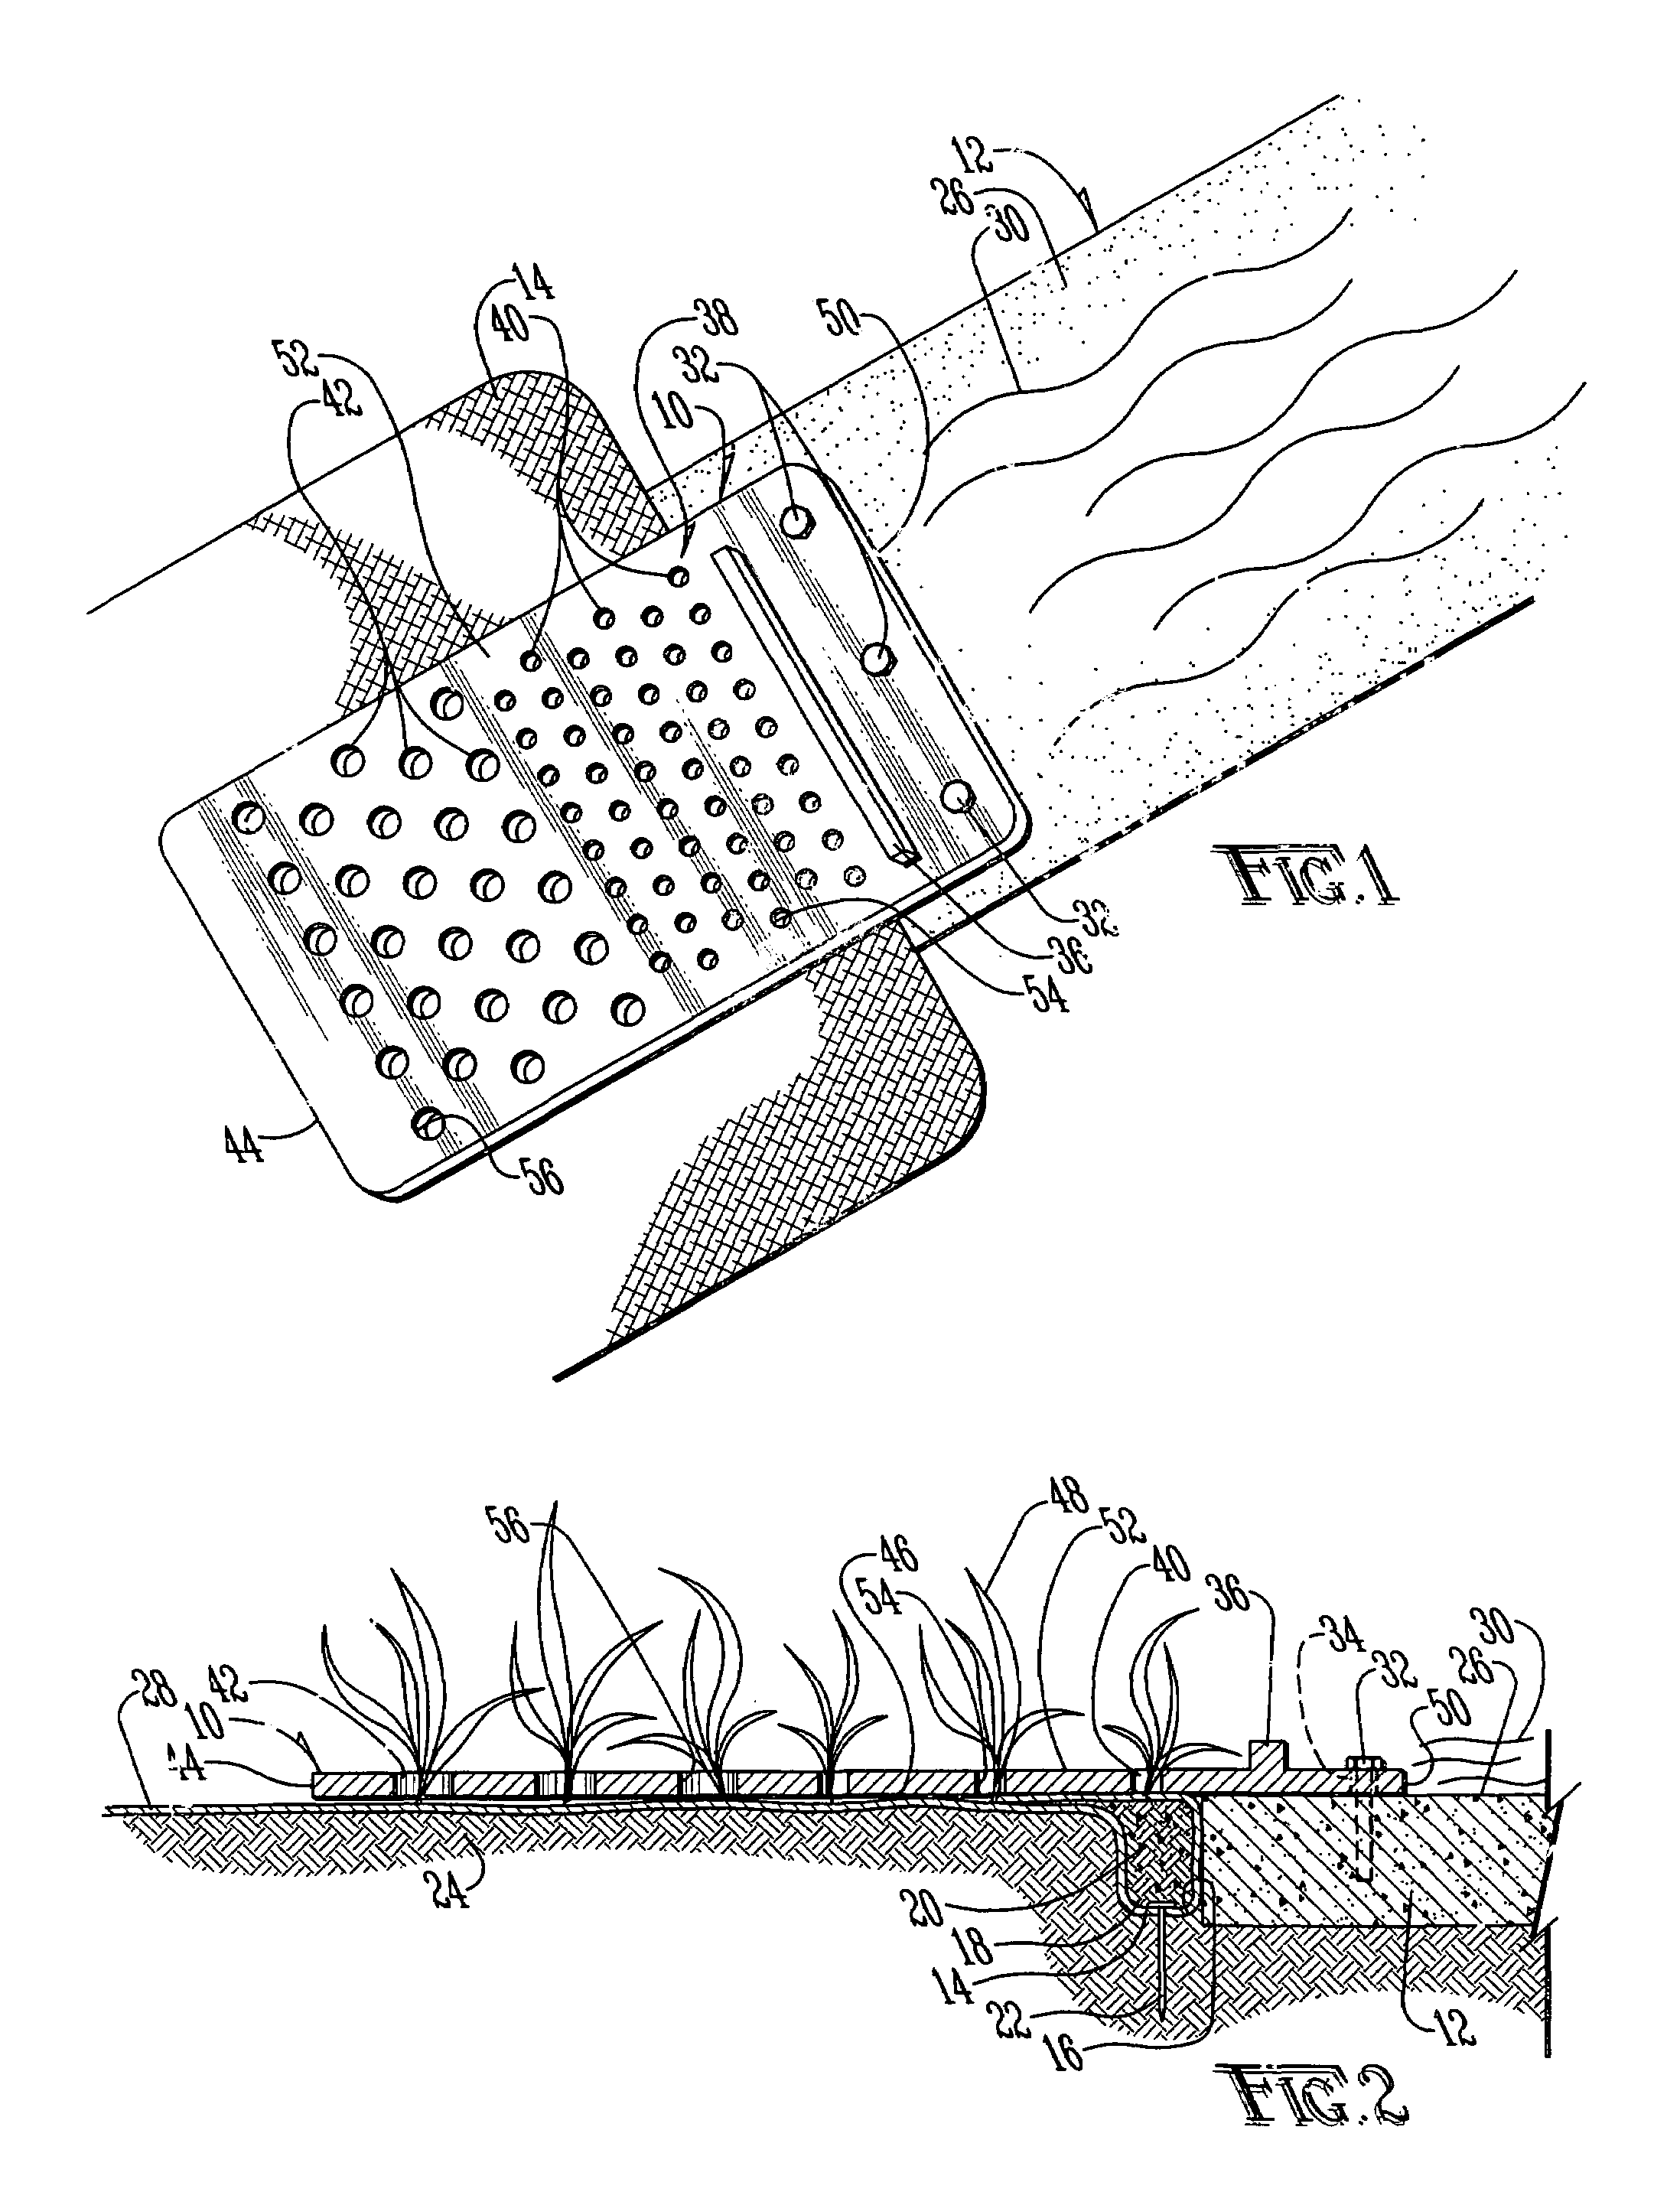 Erosion control transition mat